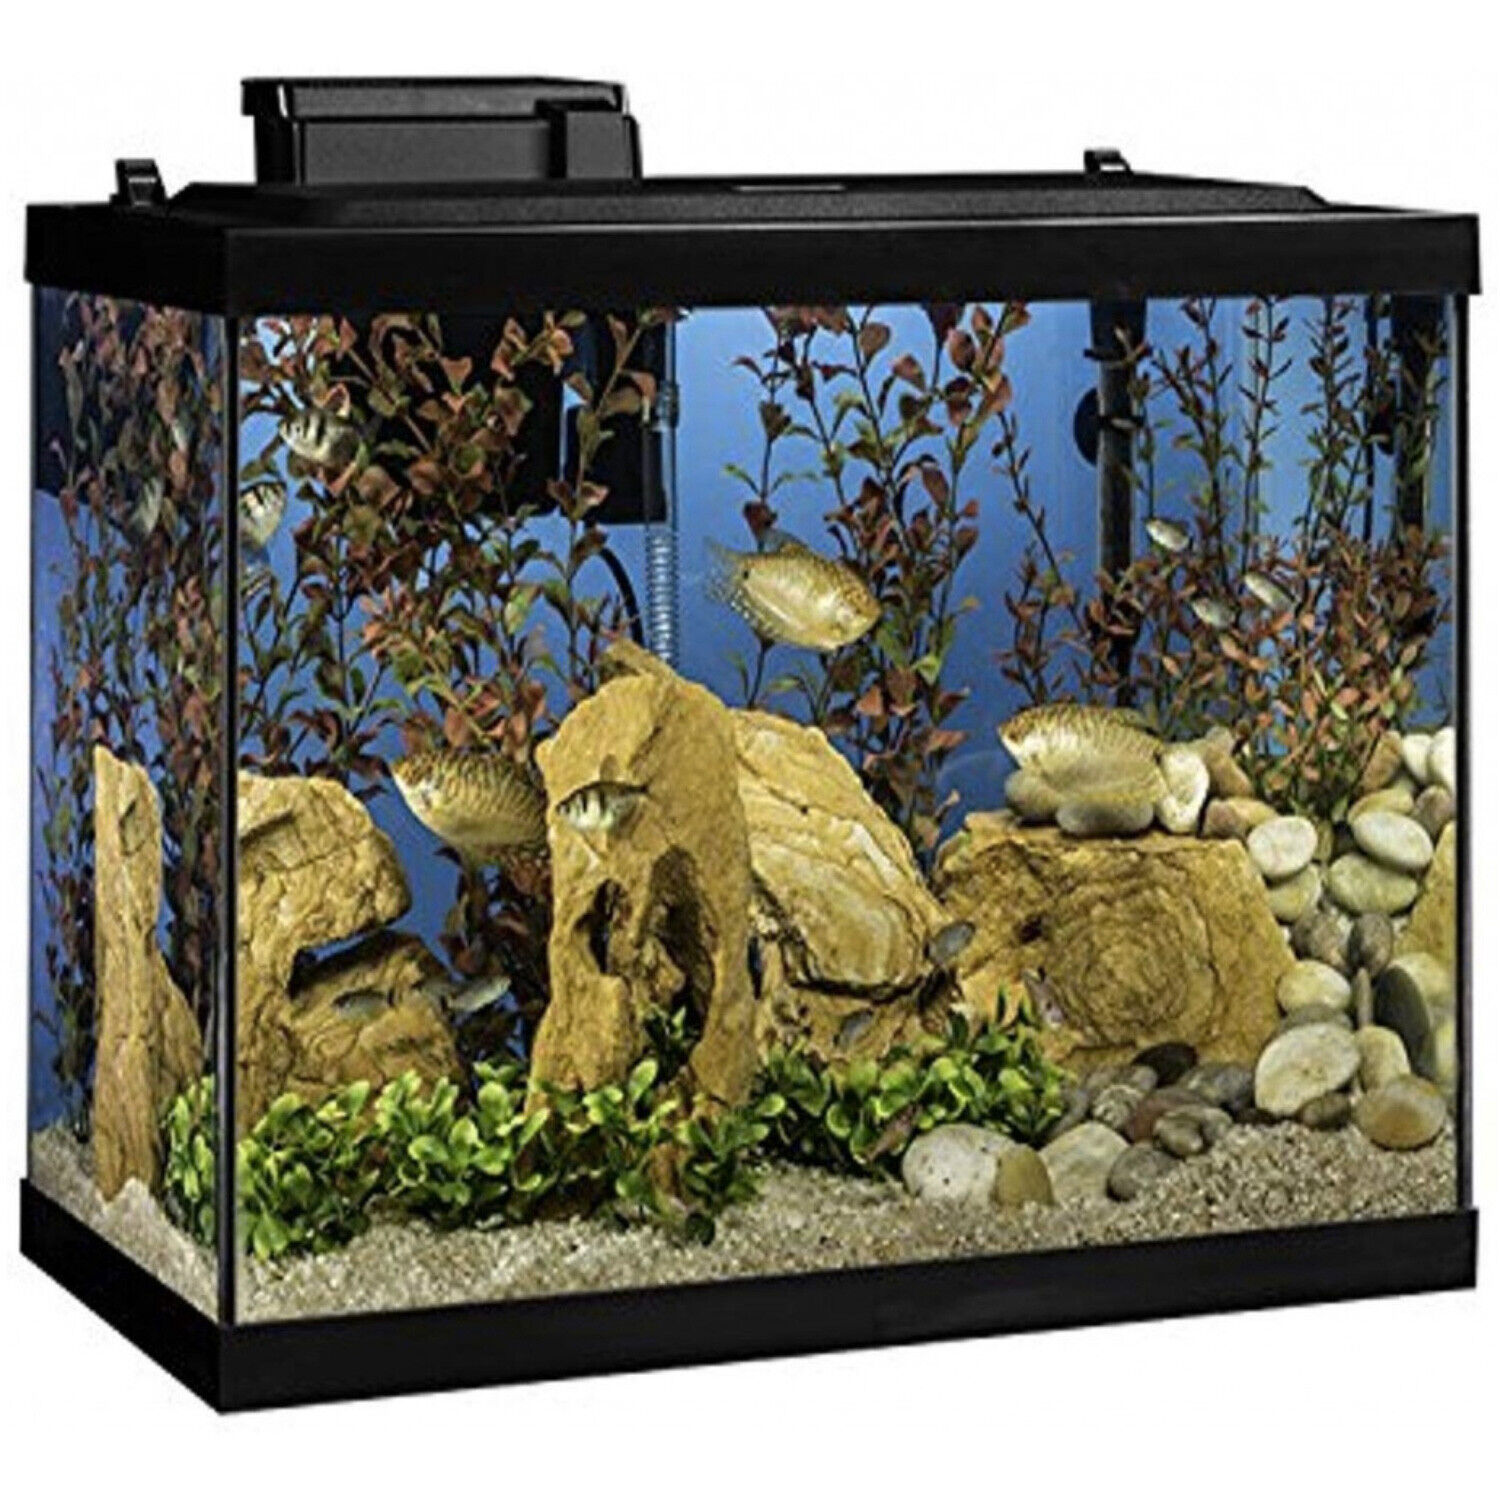 Tetra 20 Gallon Complete Aquarium Kit w/ Filter, Heater, LED & Plants